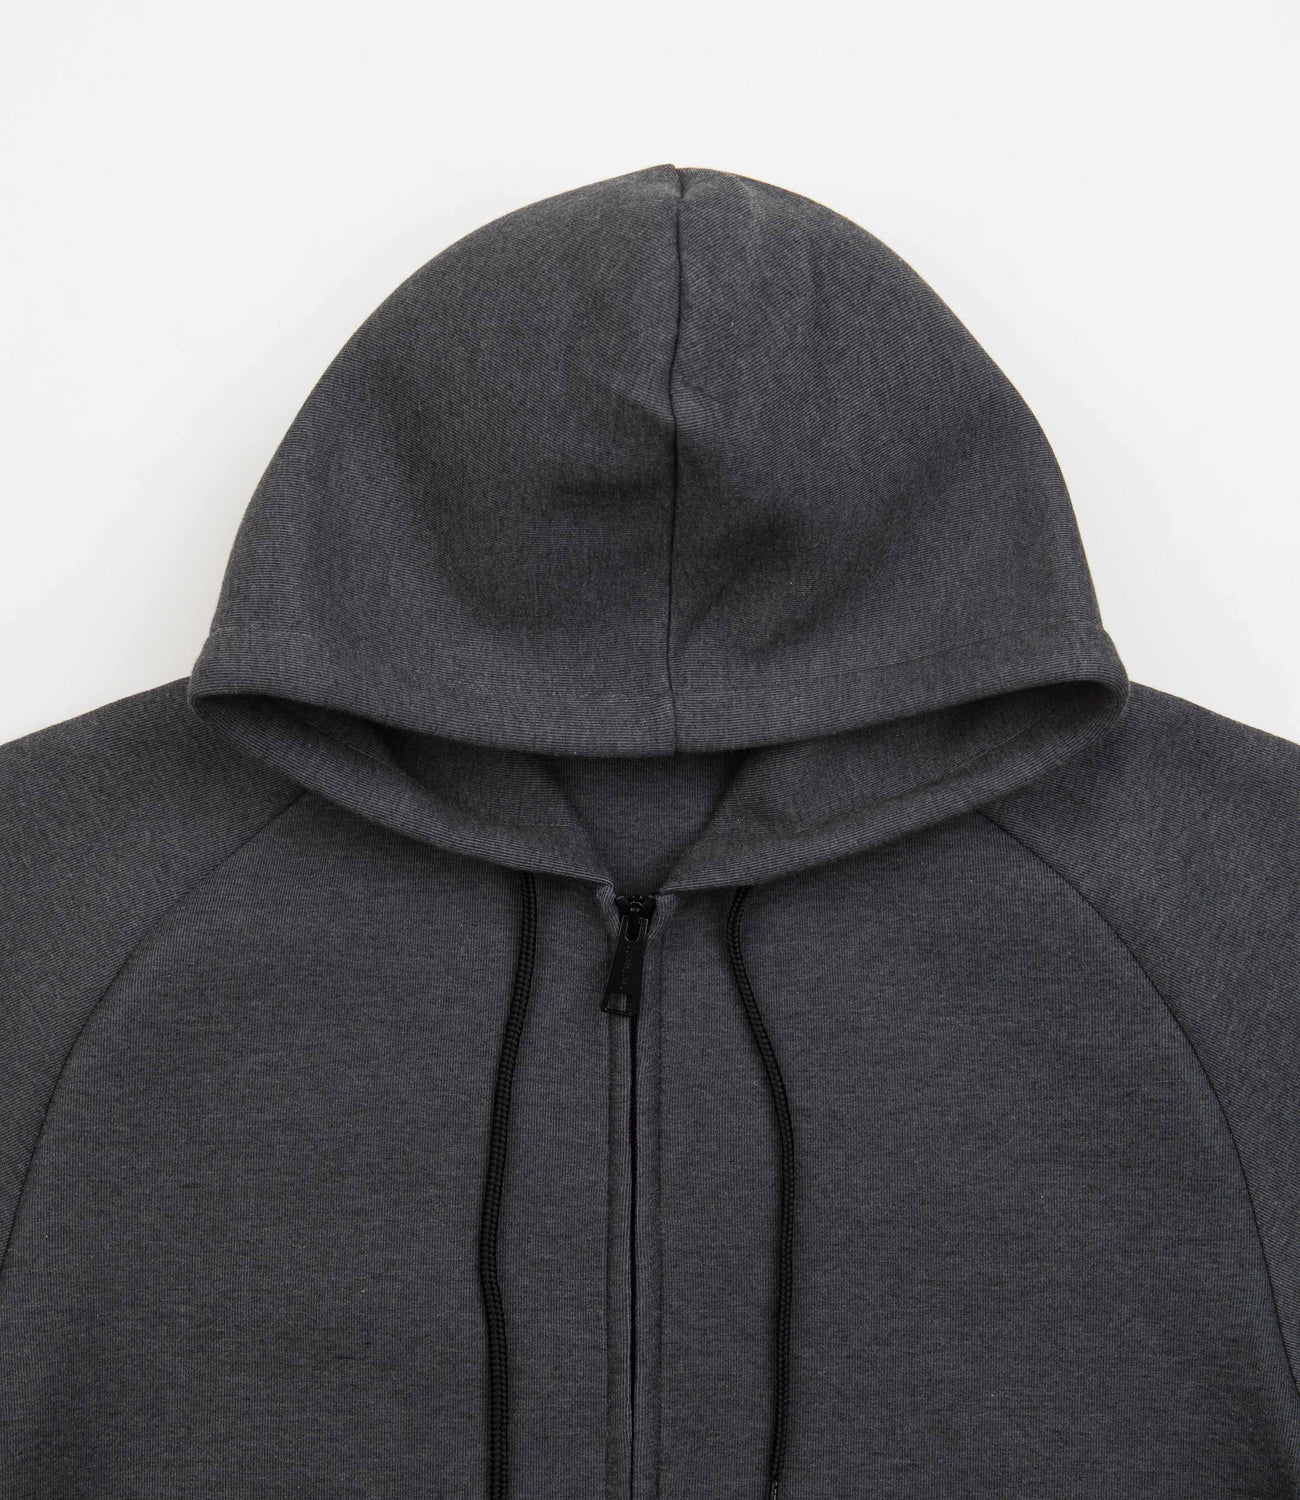 Light-Lux Hooded Jacket Black